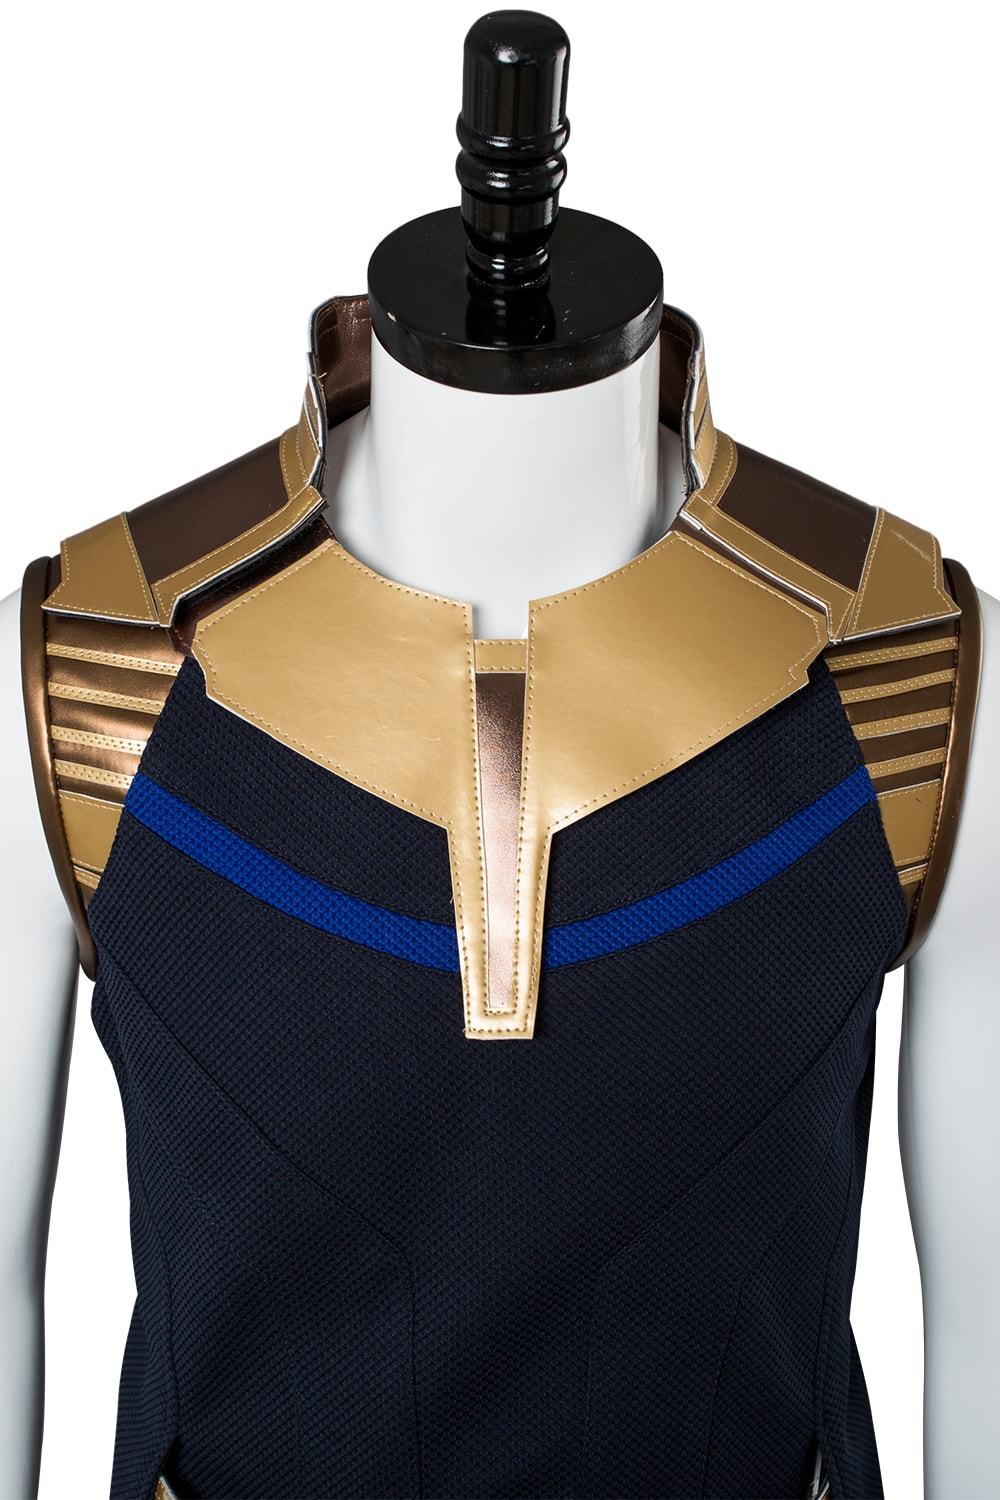 Avengers 3 Infinity War Thanos Cosplay Costume